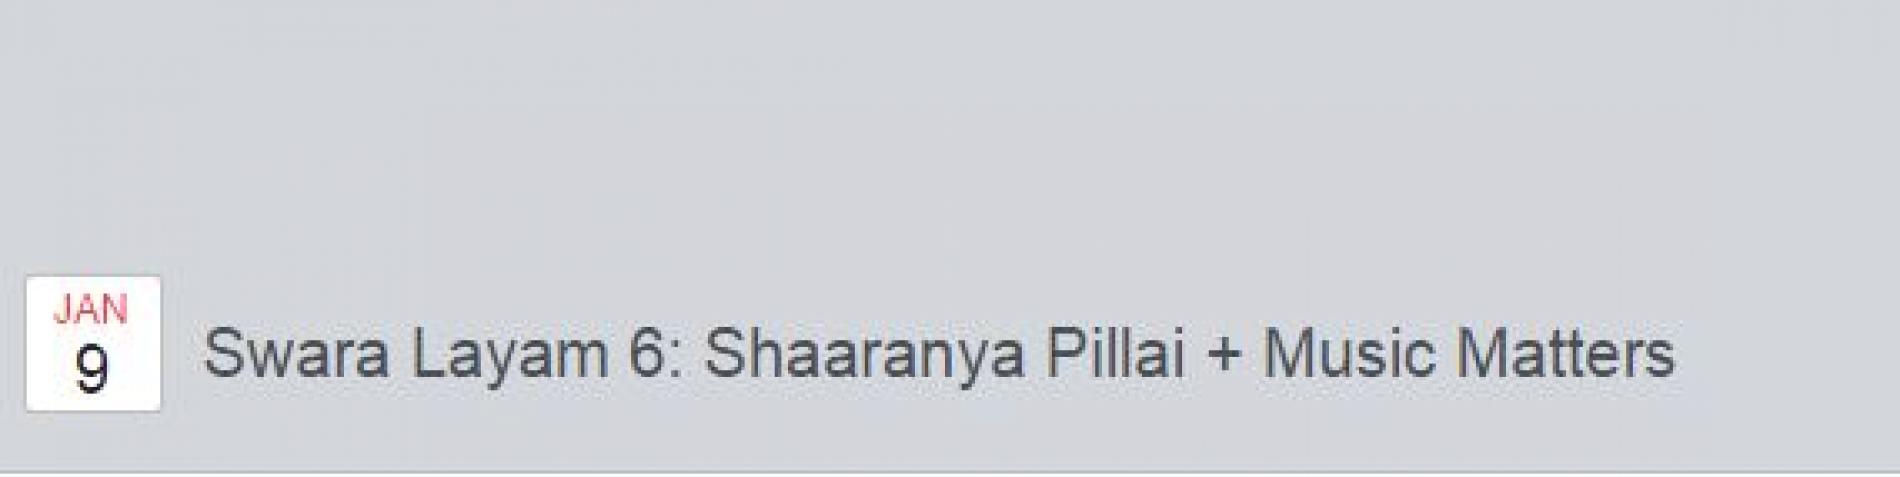 Swara Layam 6: Shaaranya Pillai + Music Matters